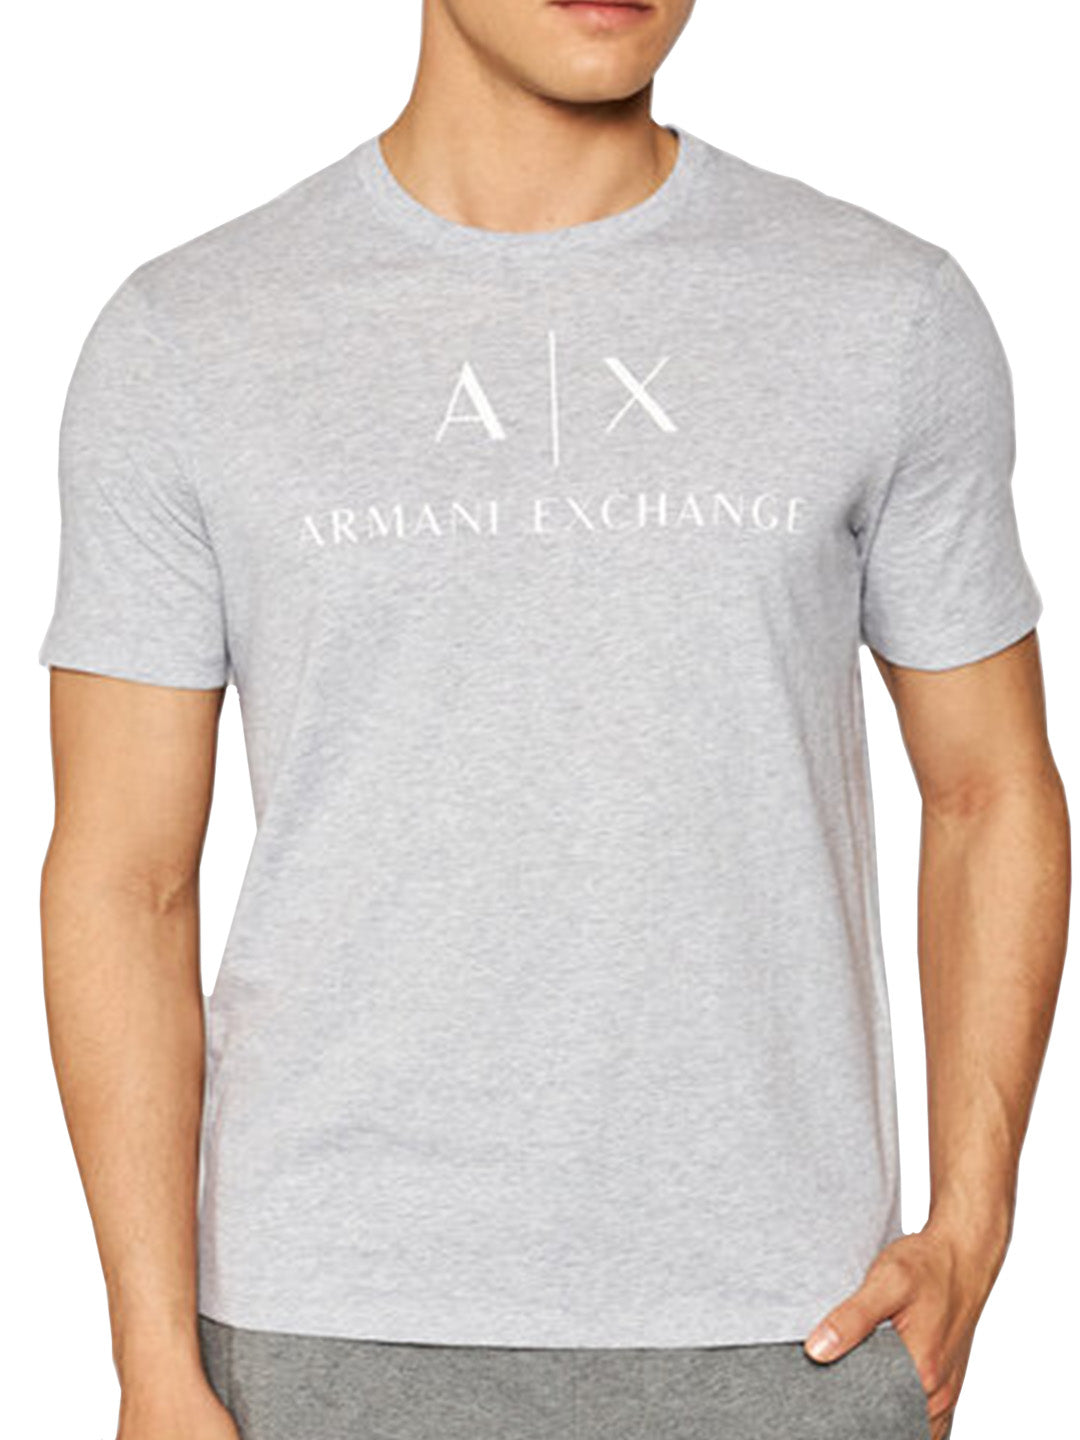 ARMANI EXCHANGE light grey/white cotton T-shirt